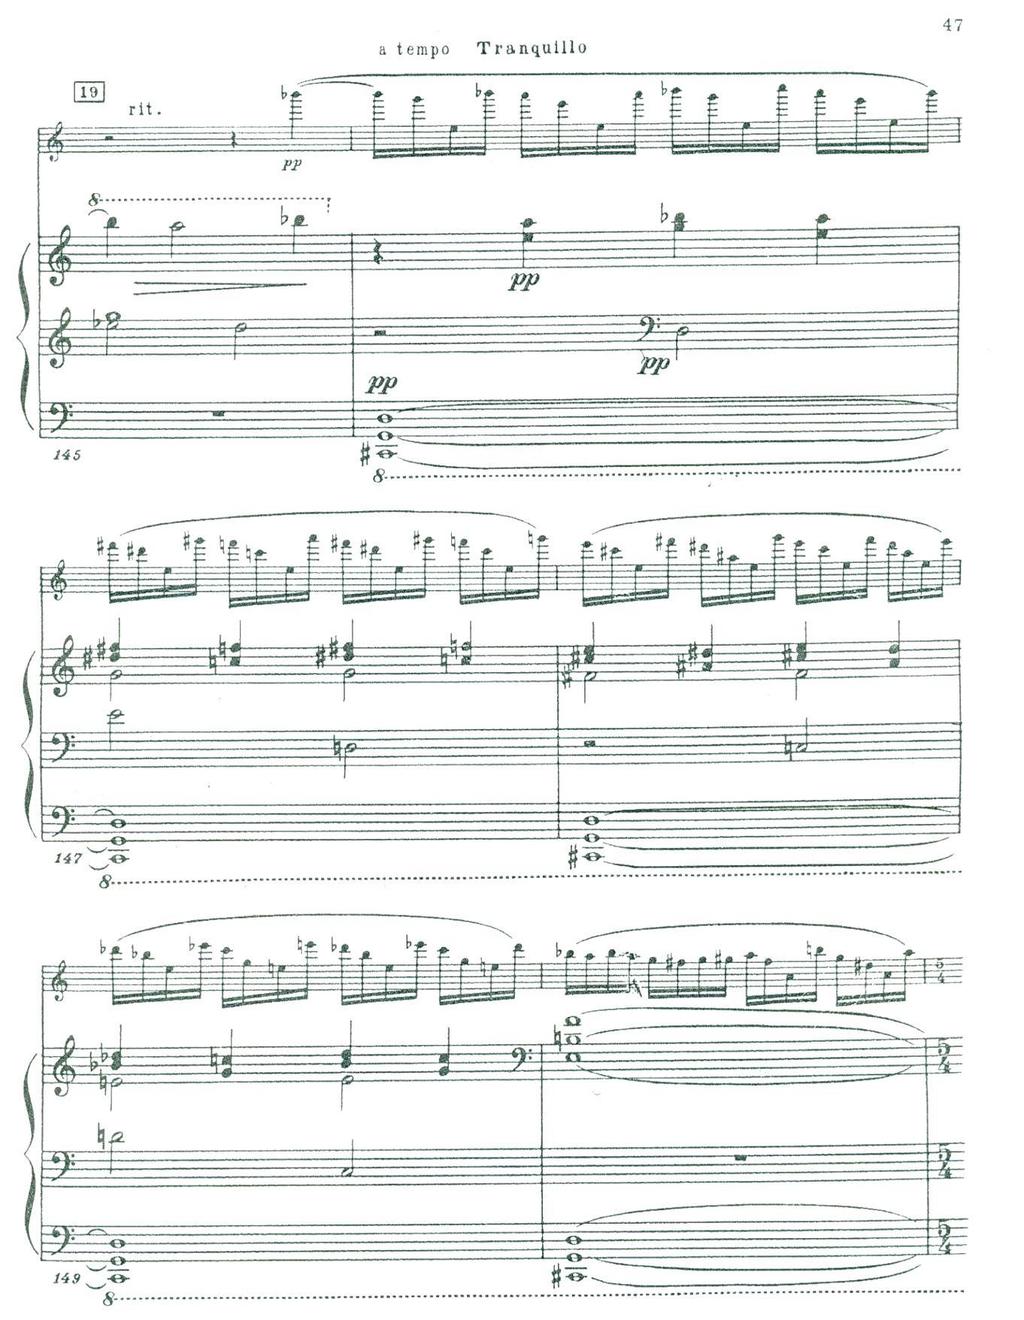 Example 4.19 Shostakovich, Violin Sonata, Op. 134, mm. 145-150 SONATA FOR VIOLIN AND PIANO, OP.